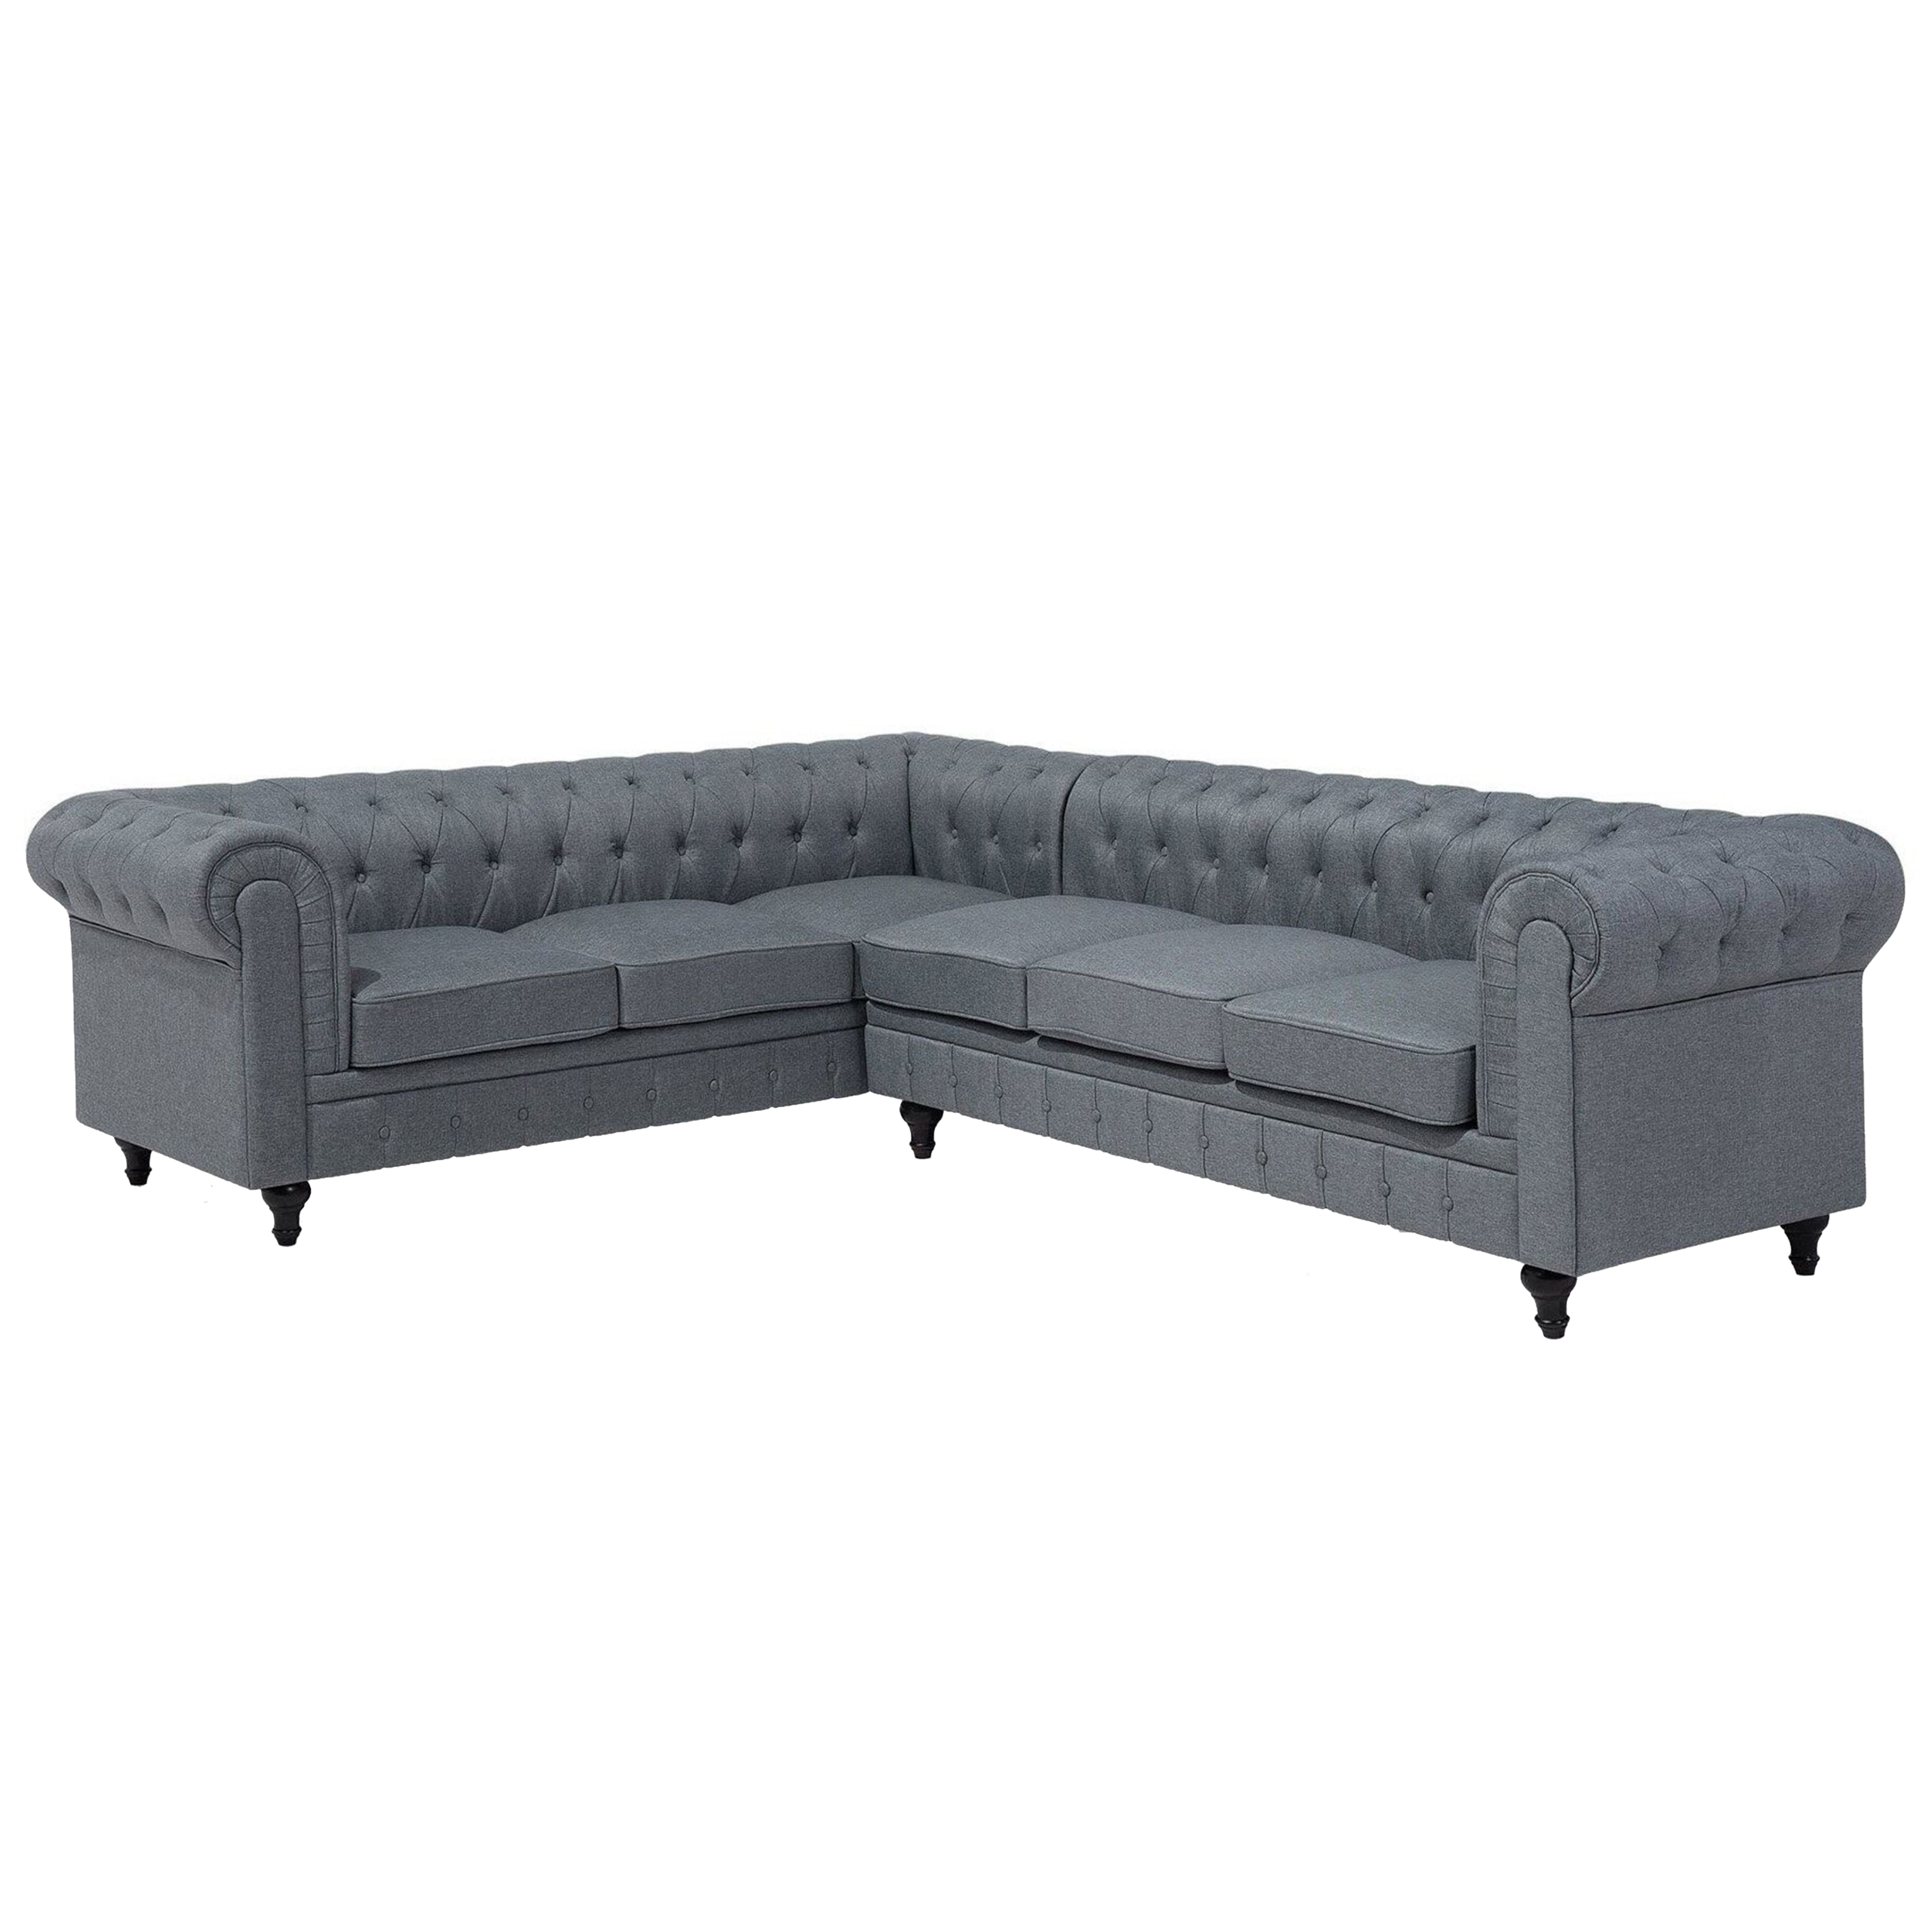 Beliani Chesterfield Right Hand Fabric Corner Sofa Grey Fabric Upholstery Dark Wood Legs Chaise 6 Seater Contemporary